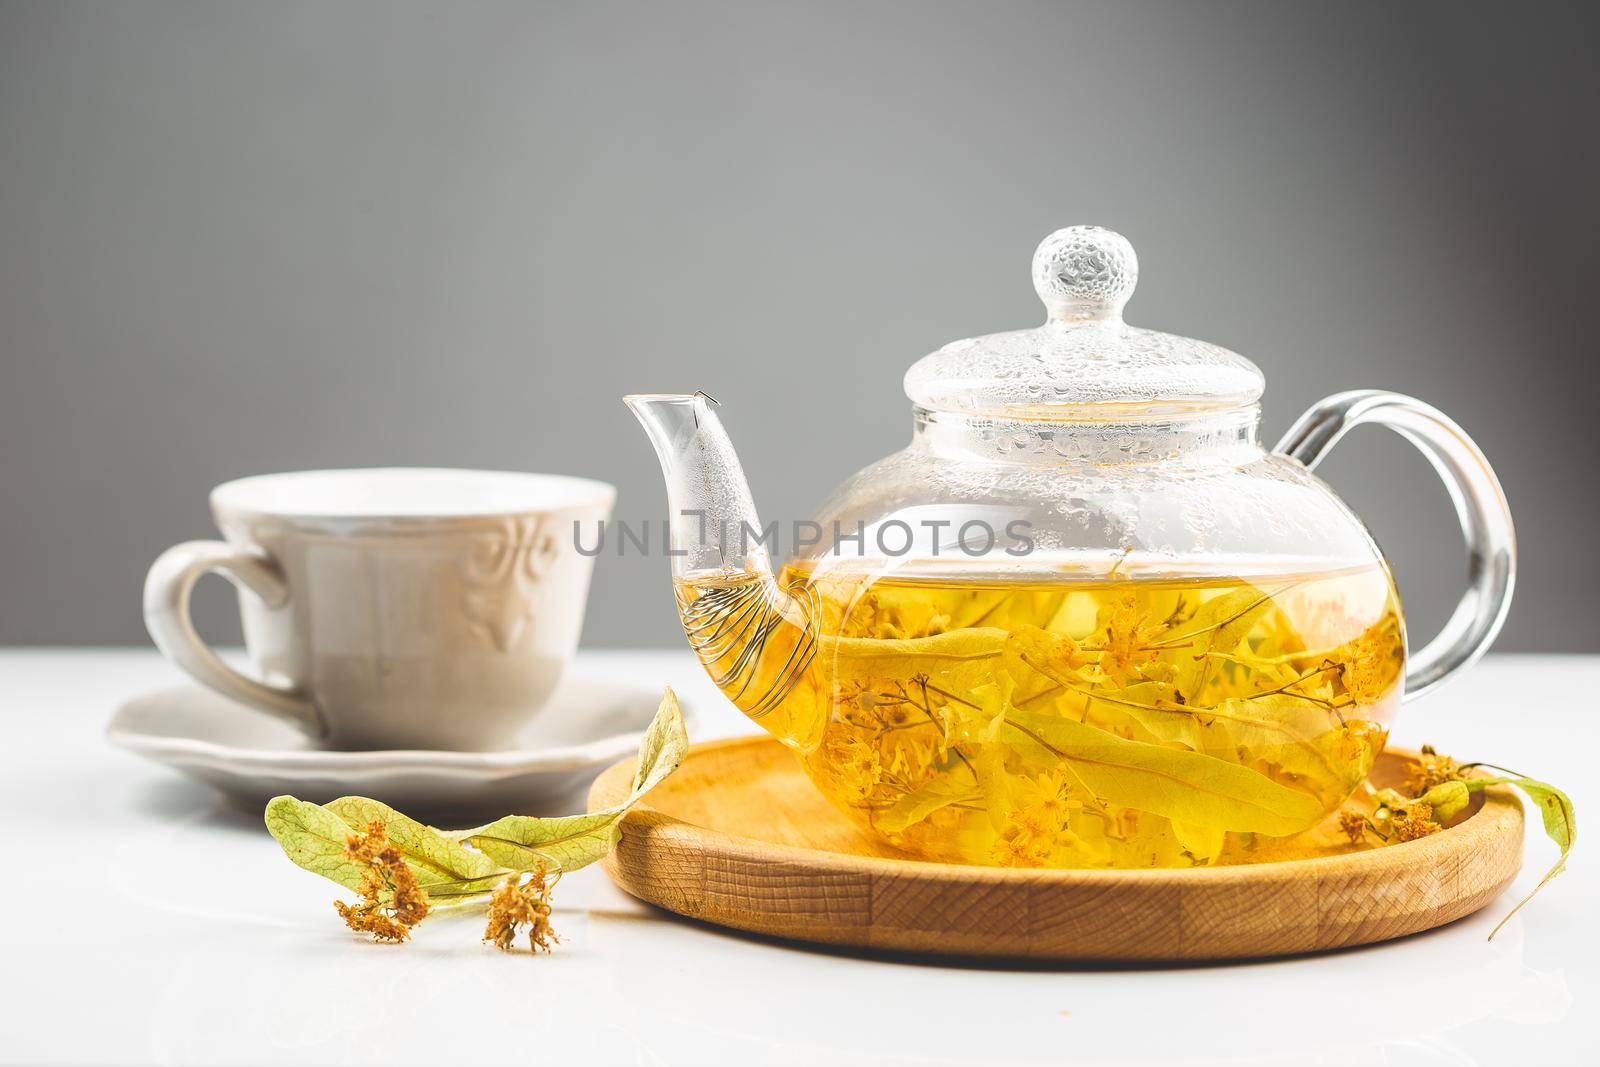 Linden or tilia flower tea in the transparent tea pot. Linden is an alternative medicine plant used in herbalism